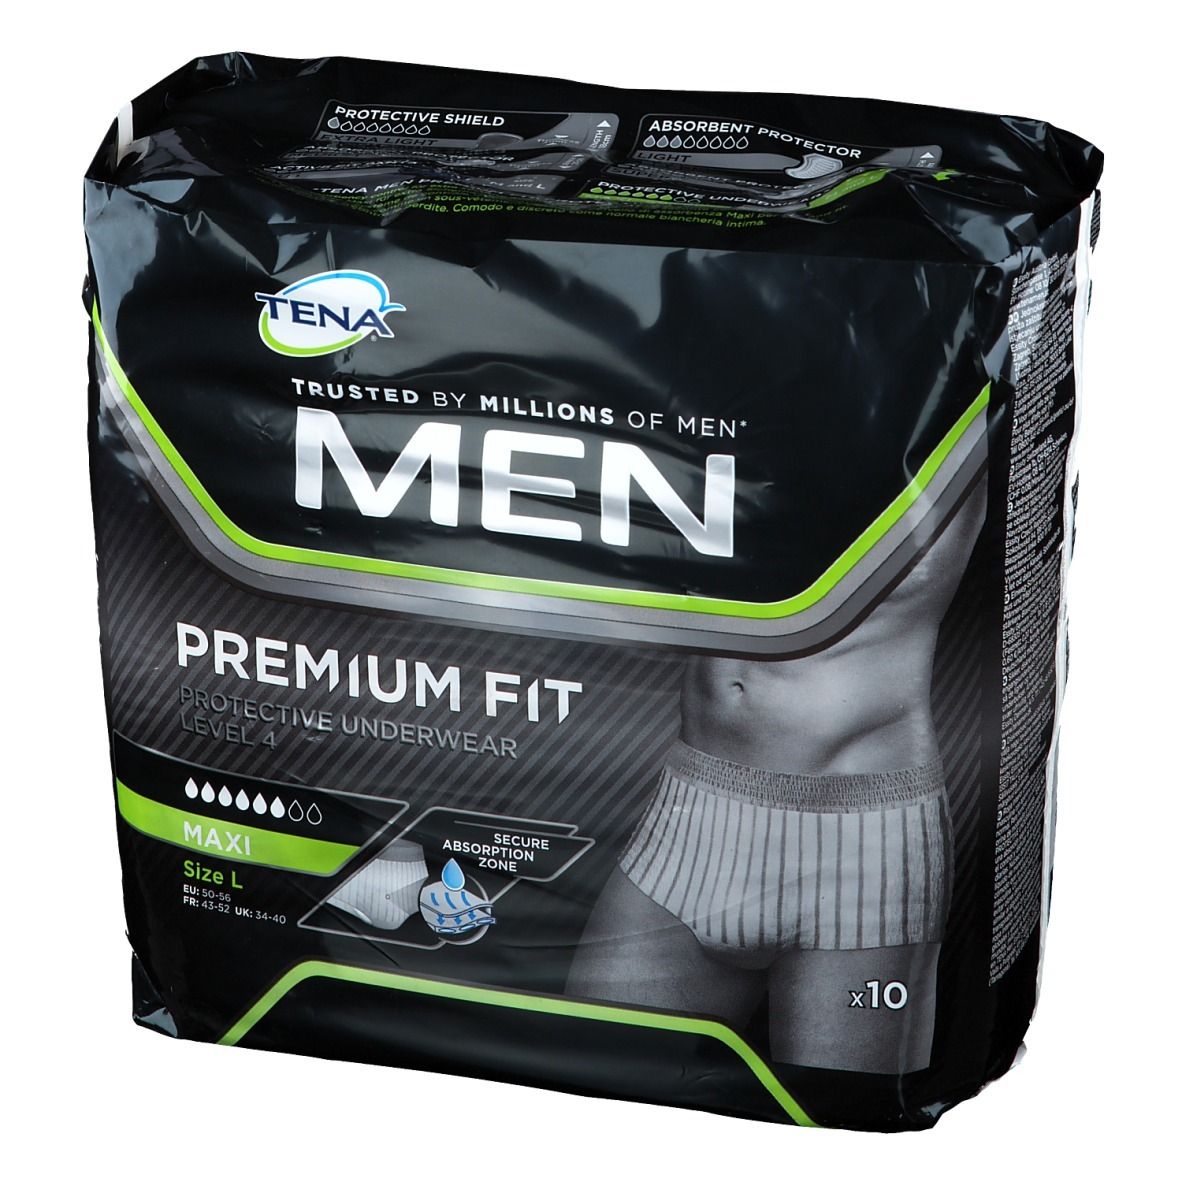 TENA® Men Premium Fit Protective Underwear L